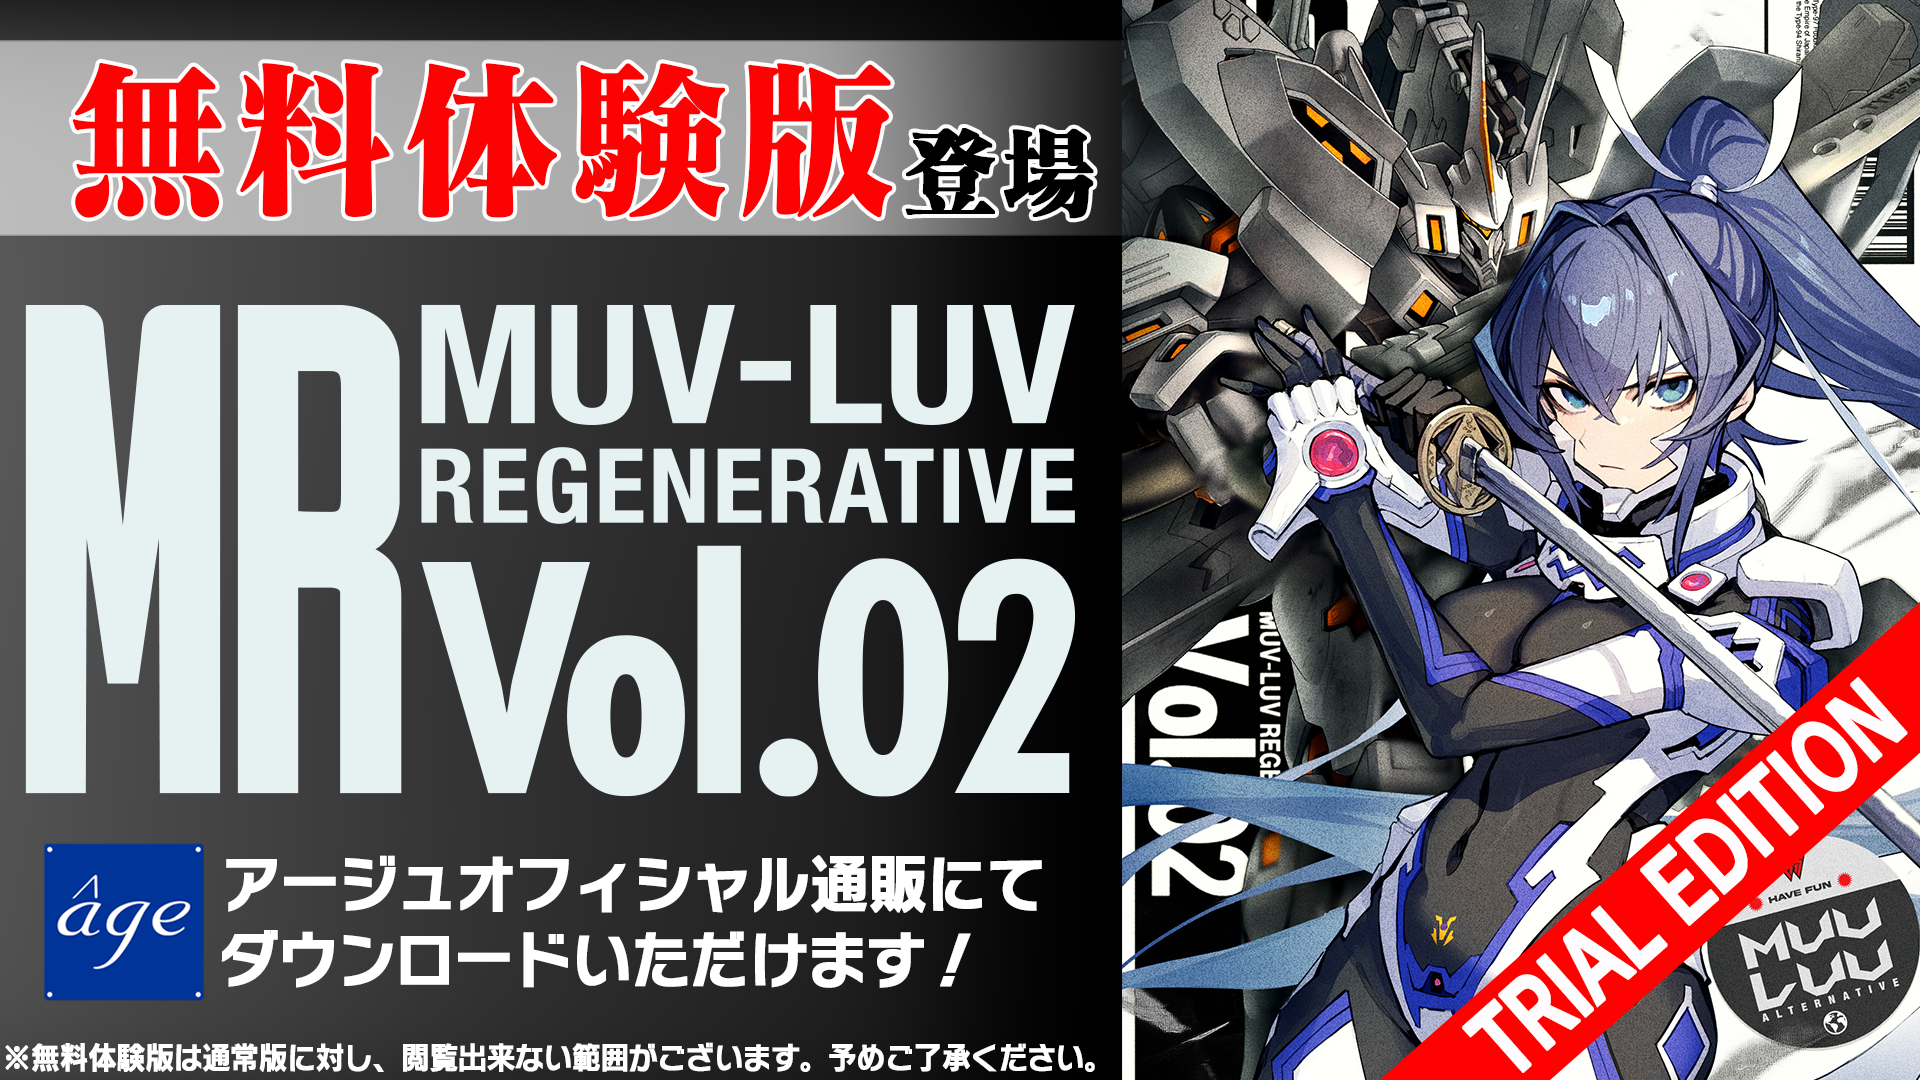 『MUV-LUV REGENERATIVE Vol.02』体験版を公開！